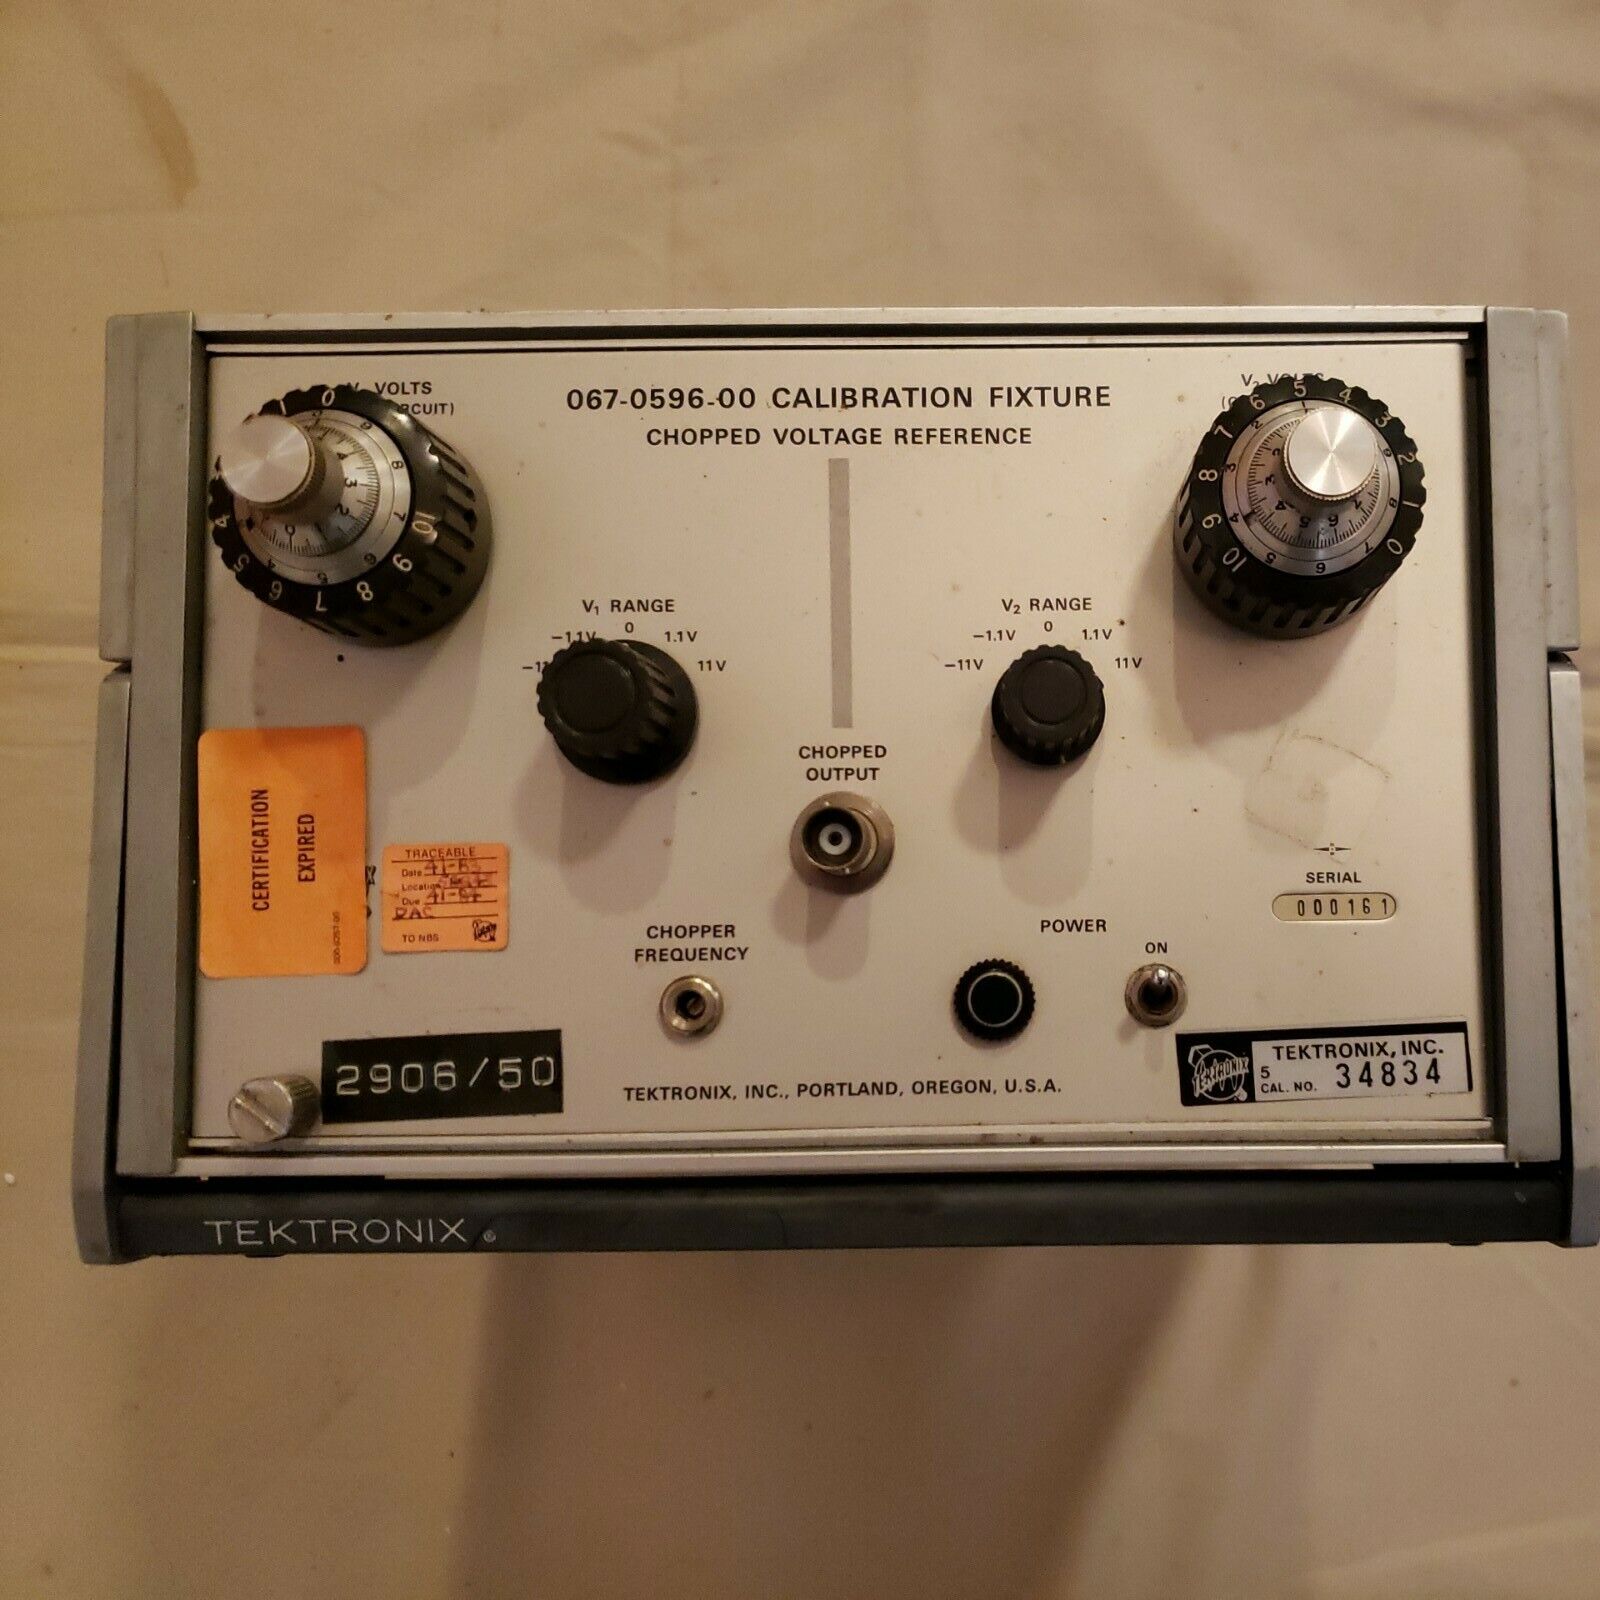 Vintage Tektronix Calibration Fixture Chopped Voltage Reference 